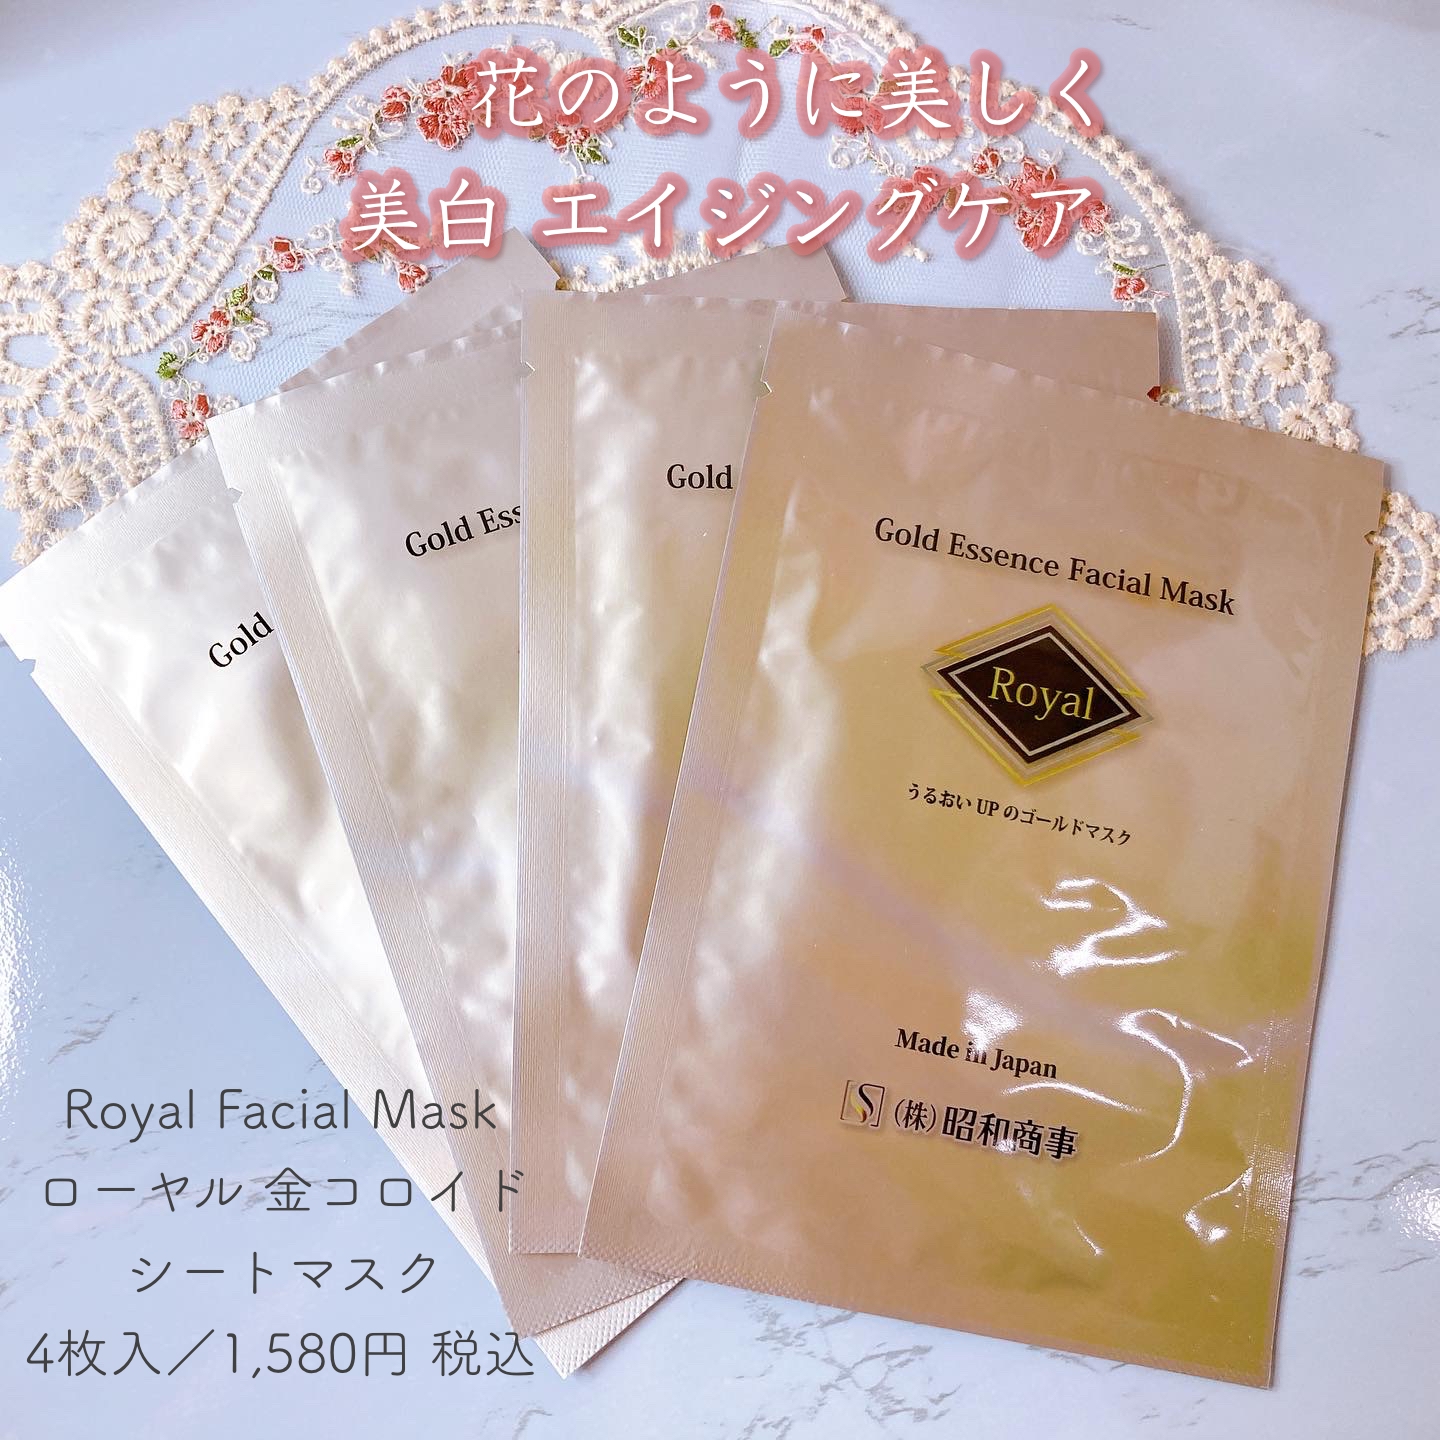 Royal Facial Mask(ローヤルフェイシャルマスク) ローヤル 金コロイド  シートマスクに関するメグさんの口コミ画像1